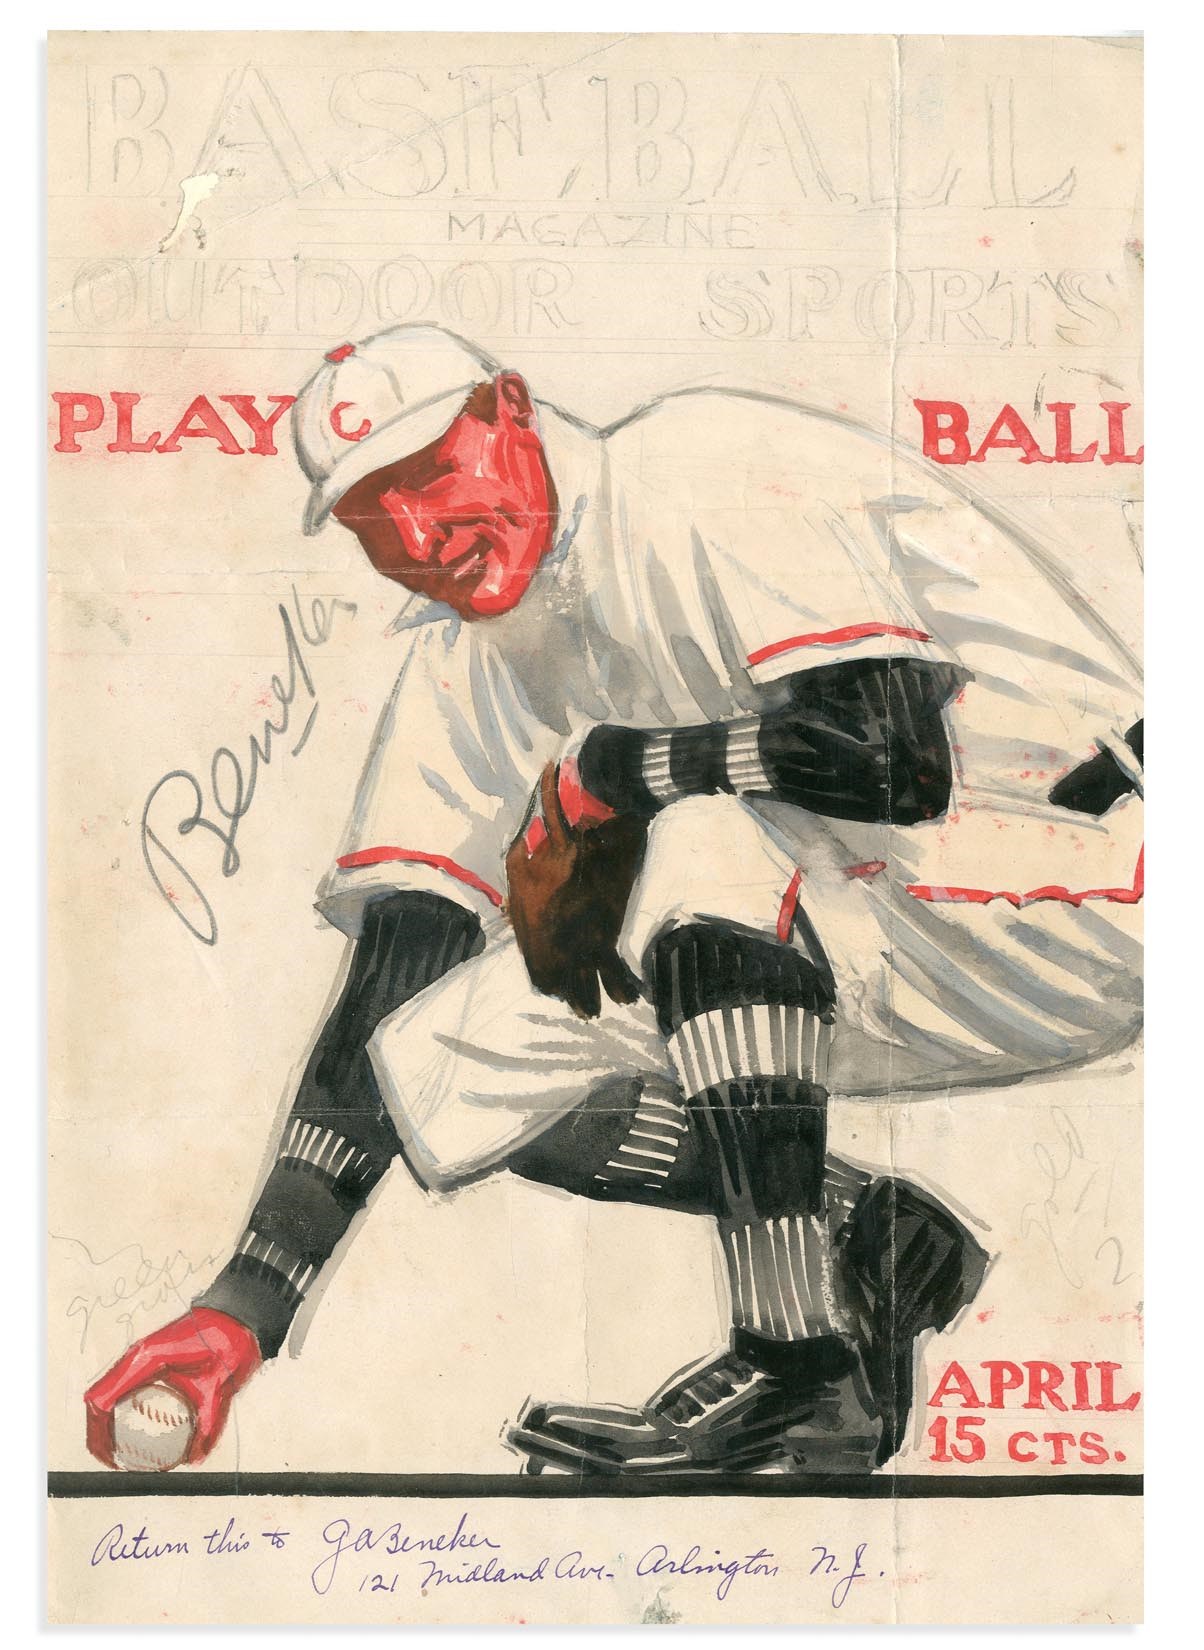 April 1912 "Baseball Magazine" Cover Art Study by Gerrit Beneker (1882-1934)